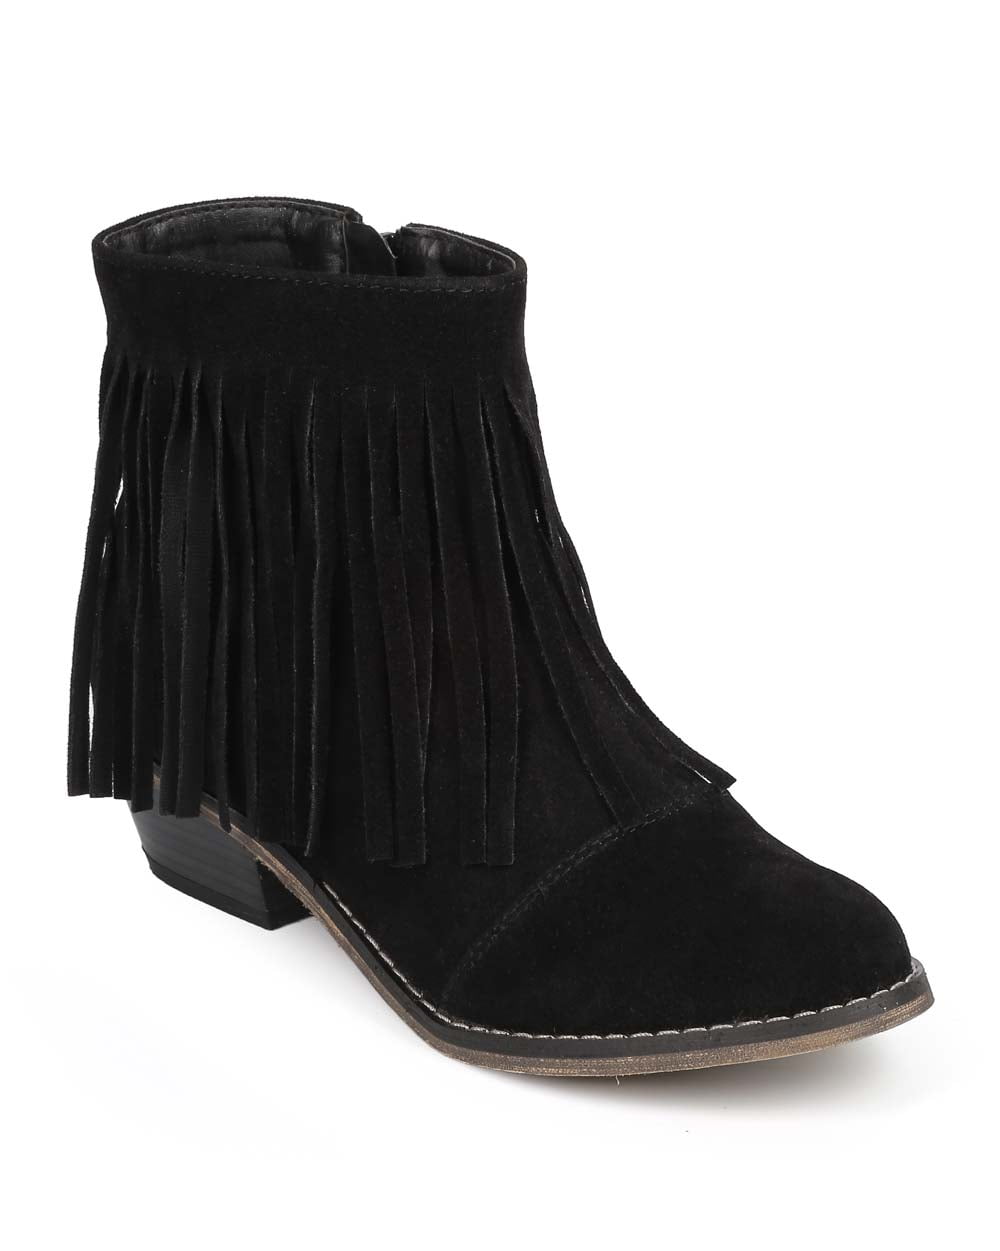 Women's Round Toe Fringe Zipper Thick Heel Western Ankle Suede Boots Dorado18